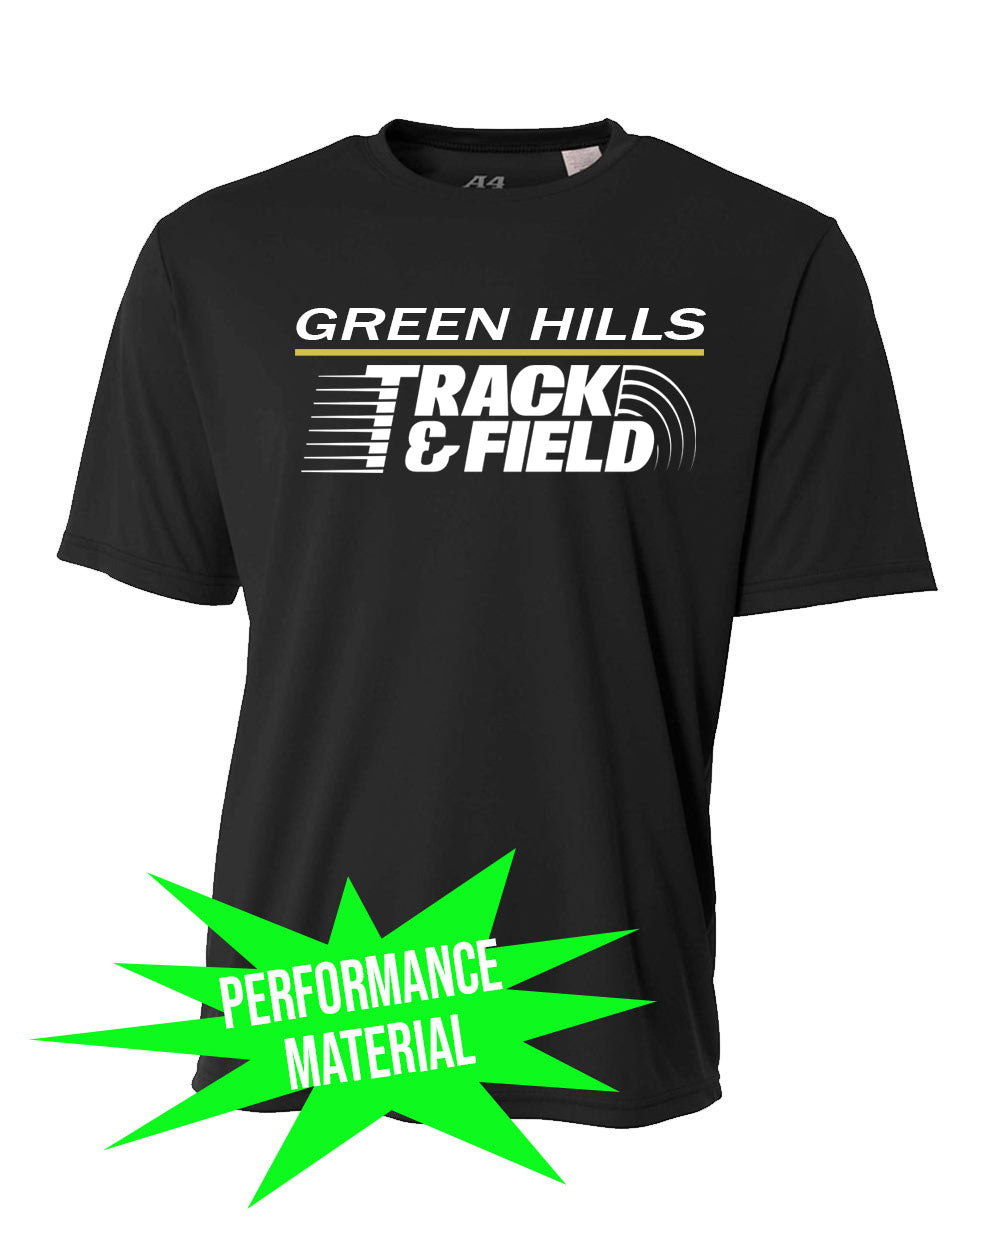 Green Hills Track Performance Material design 2 T-Shirt